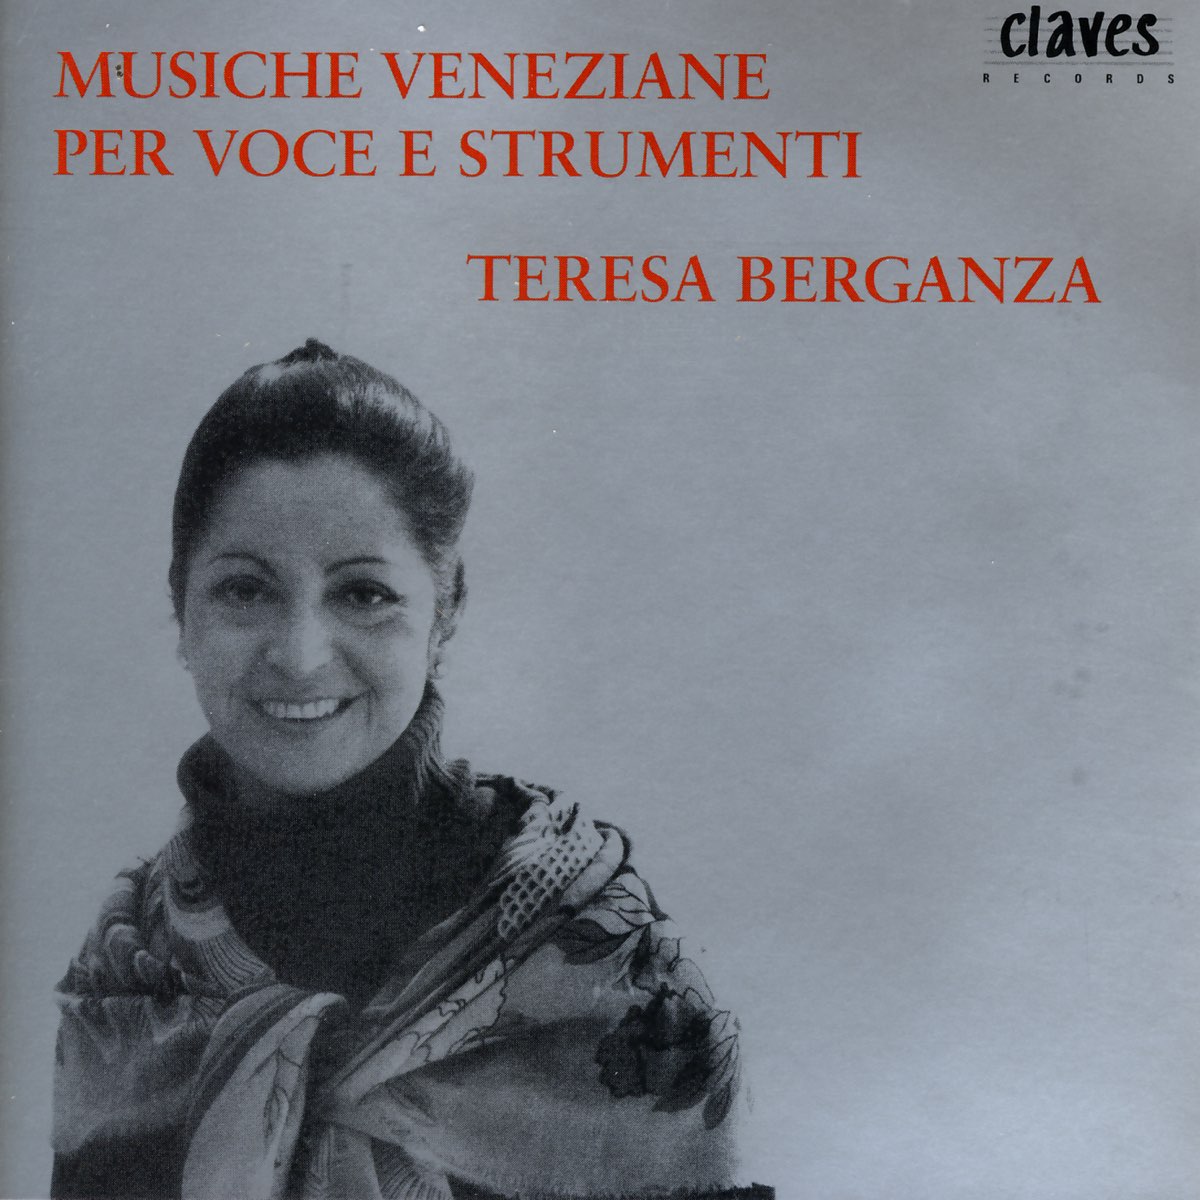 Musiche Veneziane - Album by Teresa Berganza - Apple Music